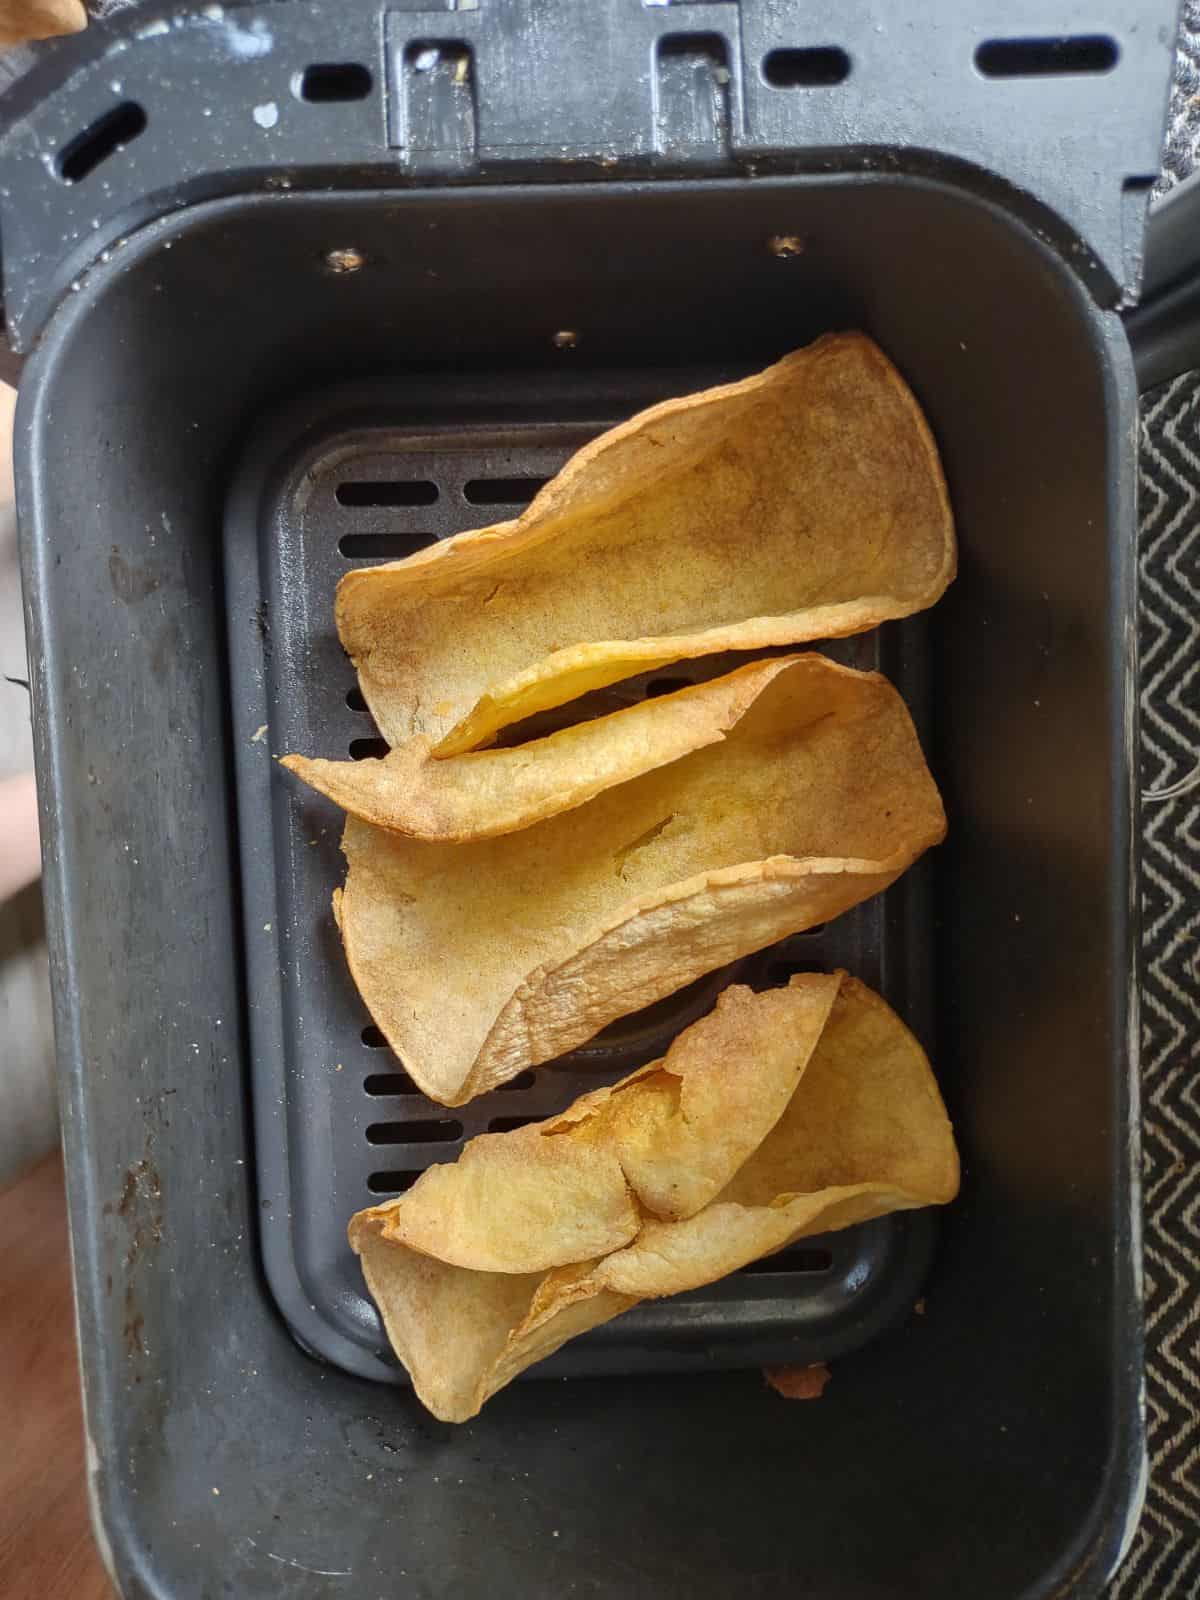 3 crunchy corn taco shells in the basket of an air fryer.